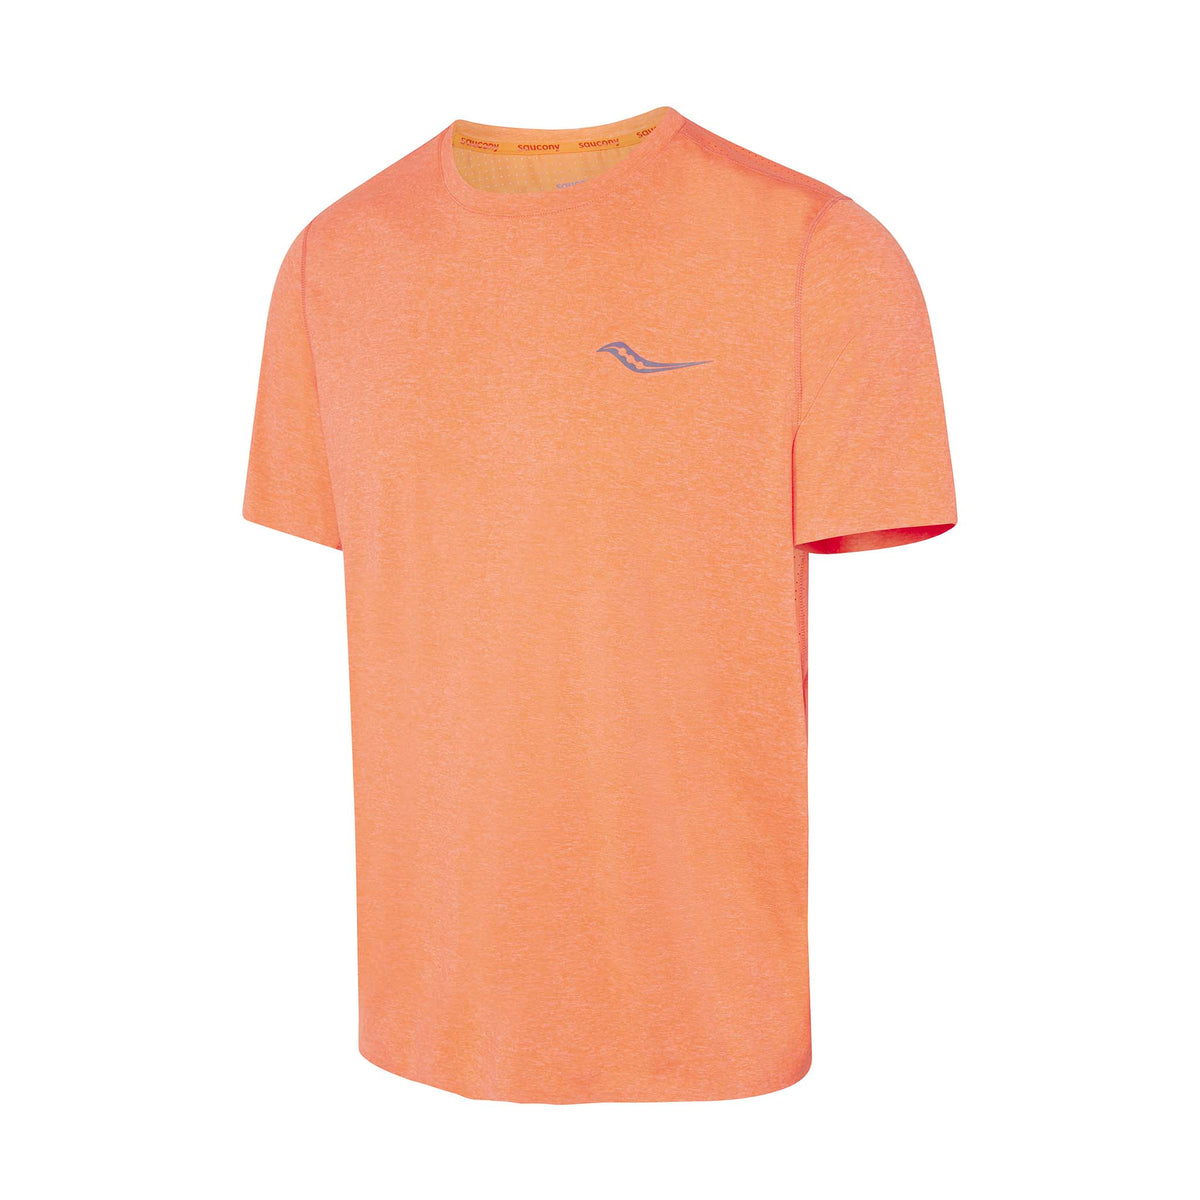 Saucony Time Trial Short Sleeve T-shirt vizi orange homme